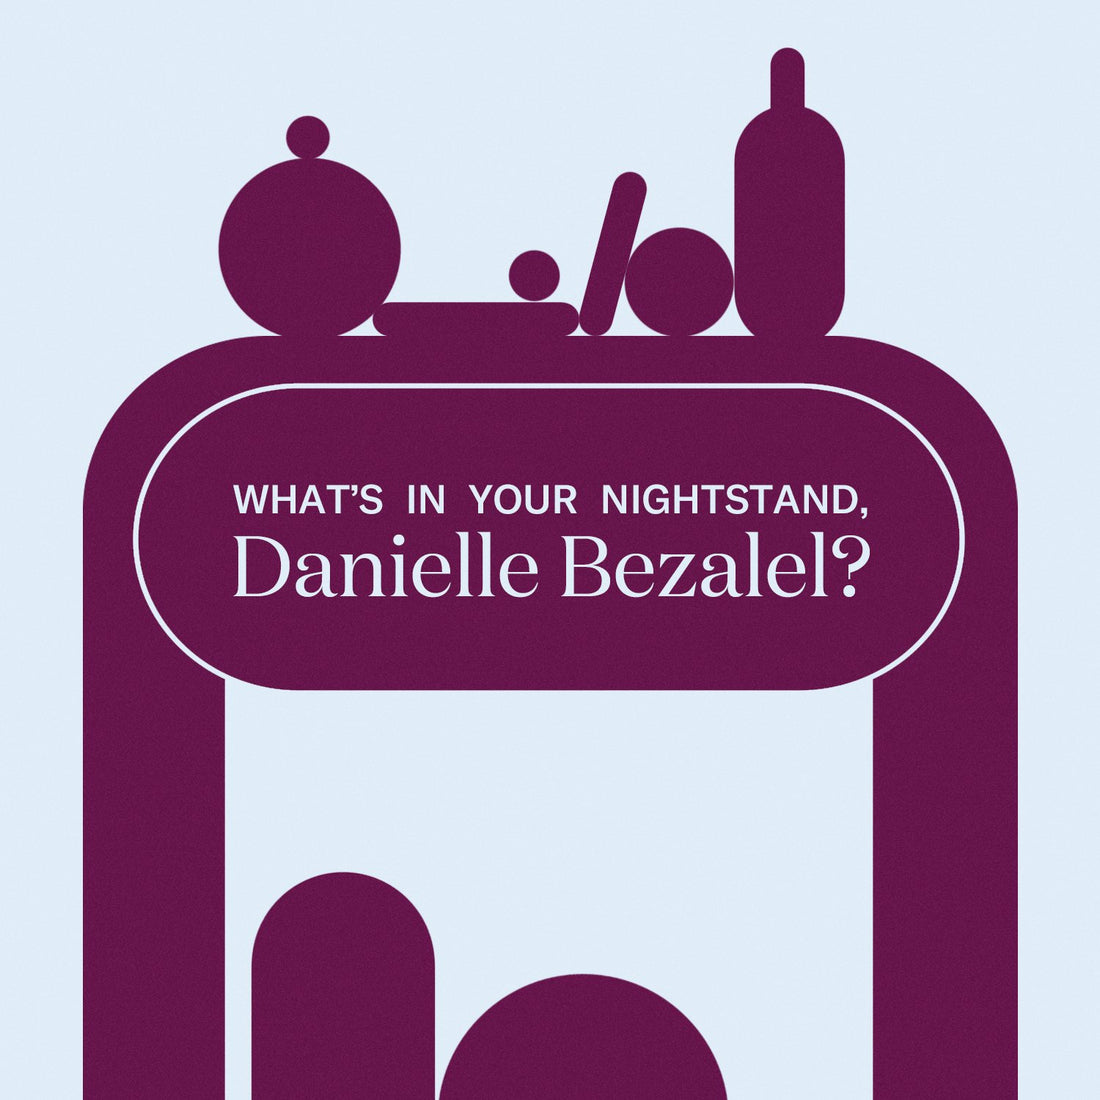 what's in your nightstand, danielle bezalel?